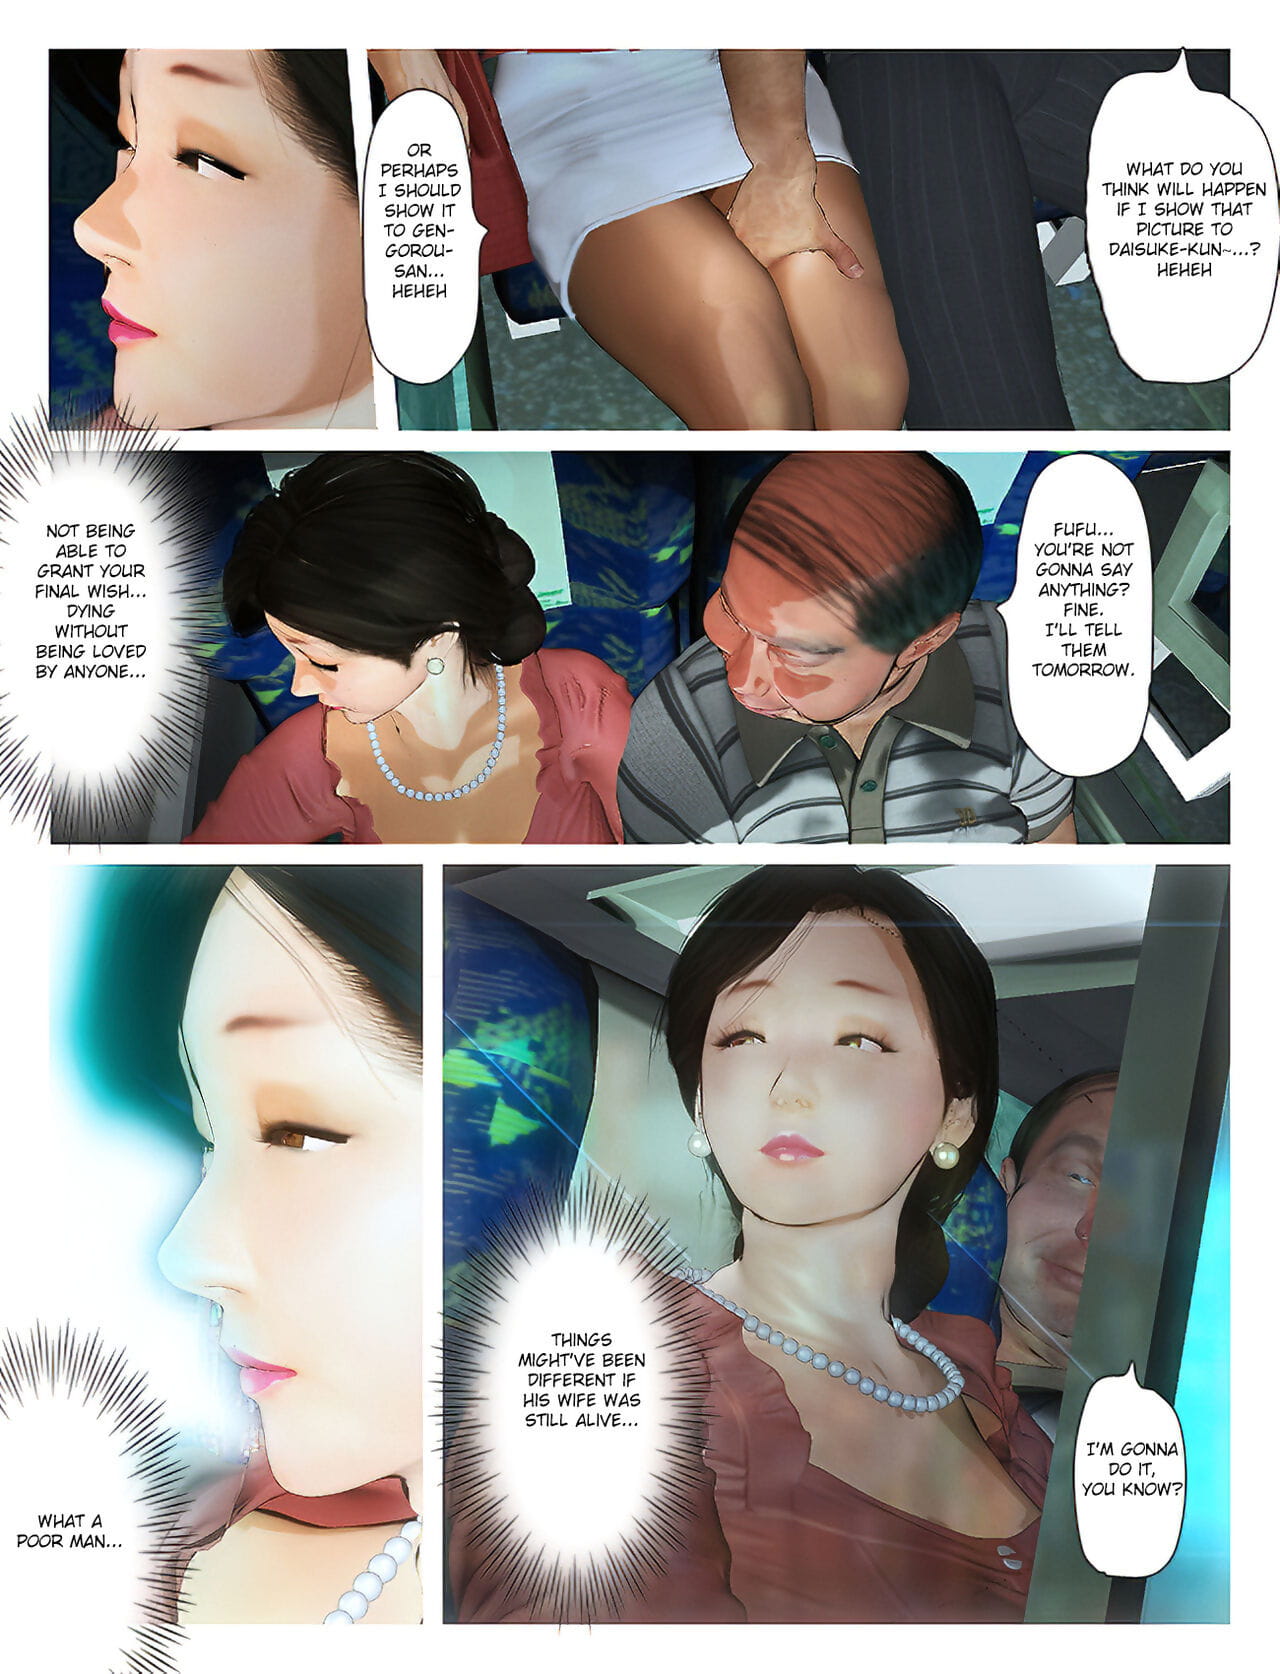 Kyou no  2019:2 - Parte 2 page 1